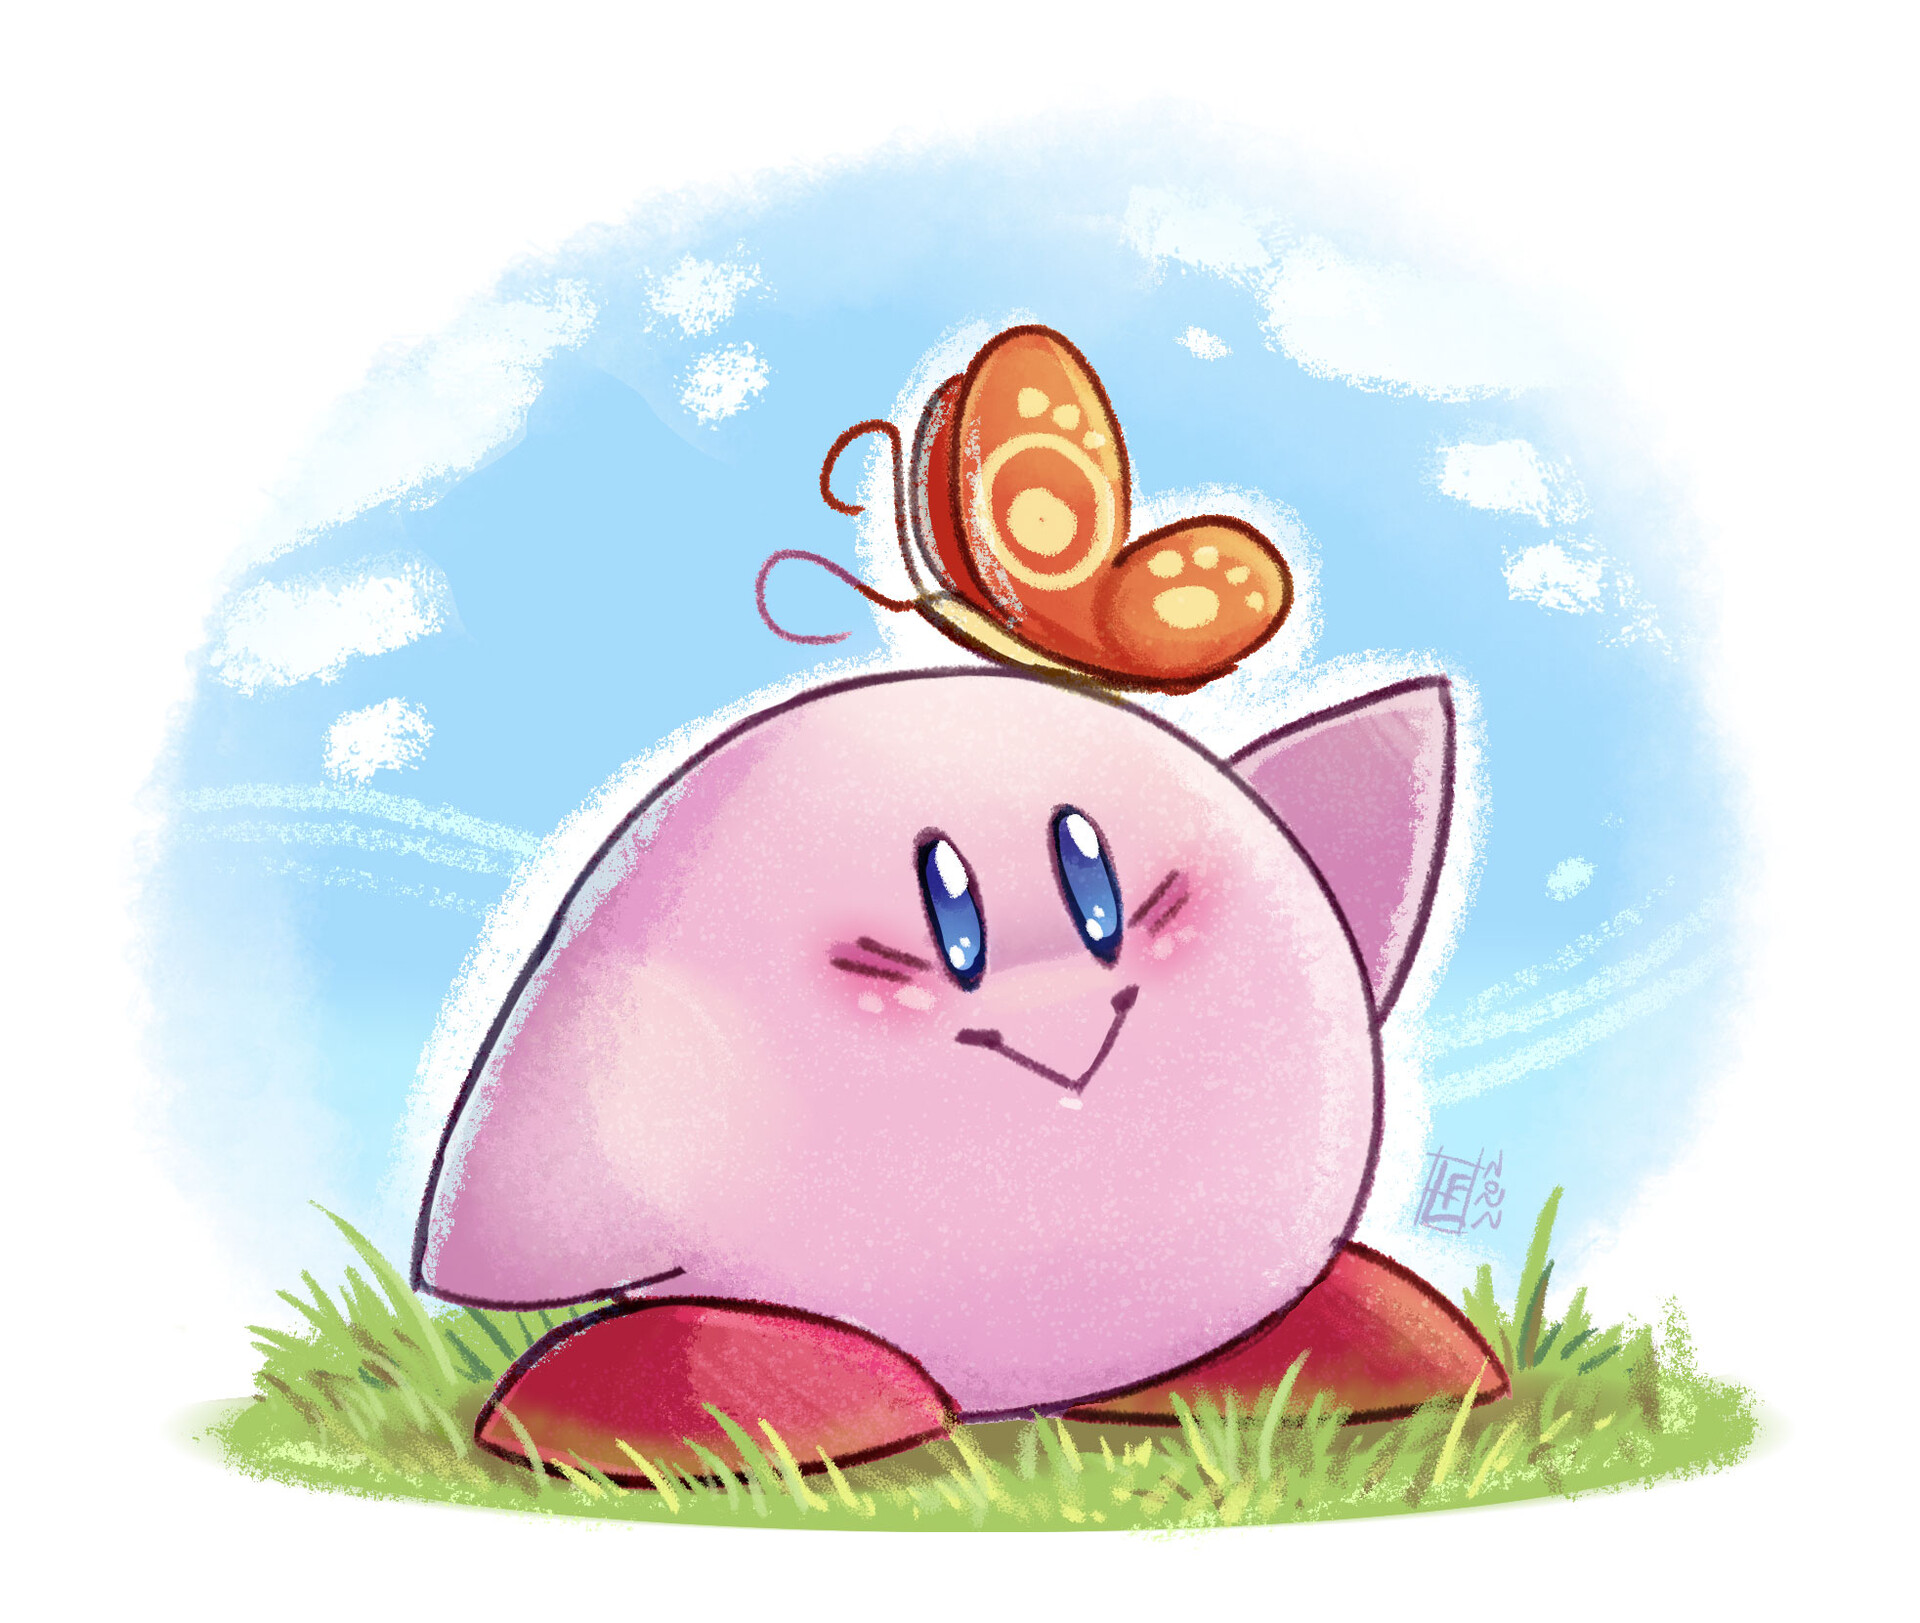 ArtStation - Kirby : The poyo boy